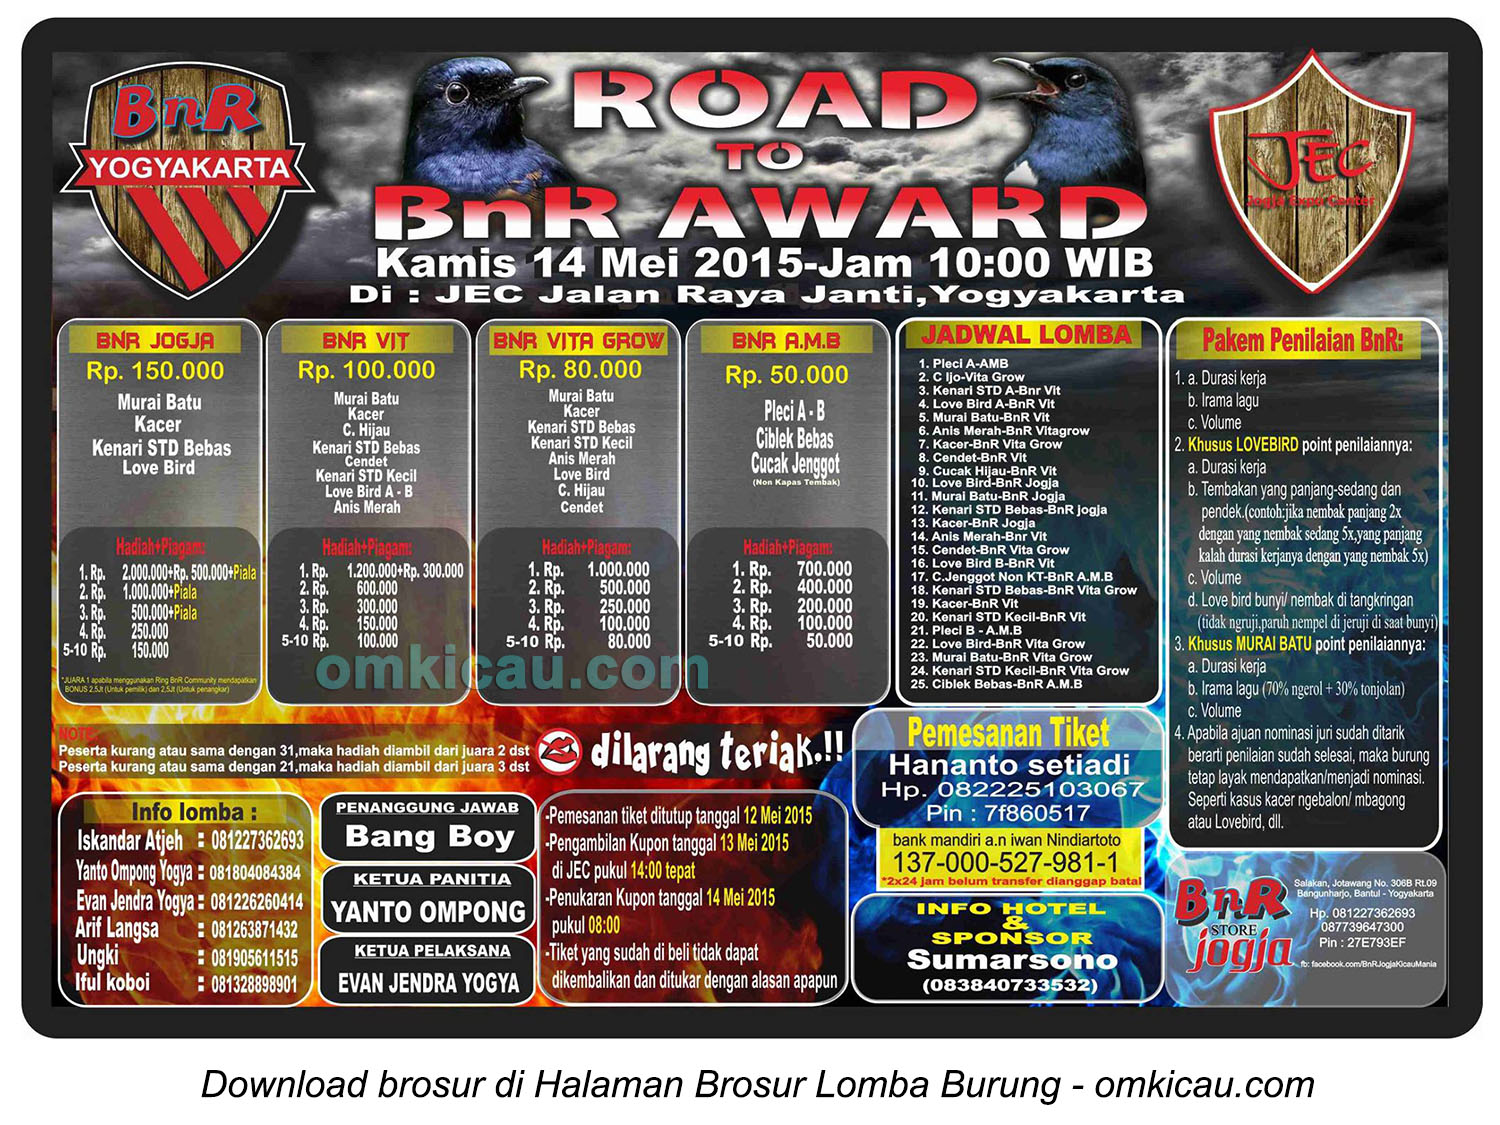 Brosur Lomba Burung Berkicau Road to BnR Award, Jogja, 14 Mei 2015